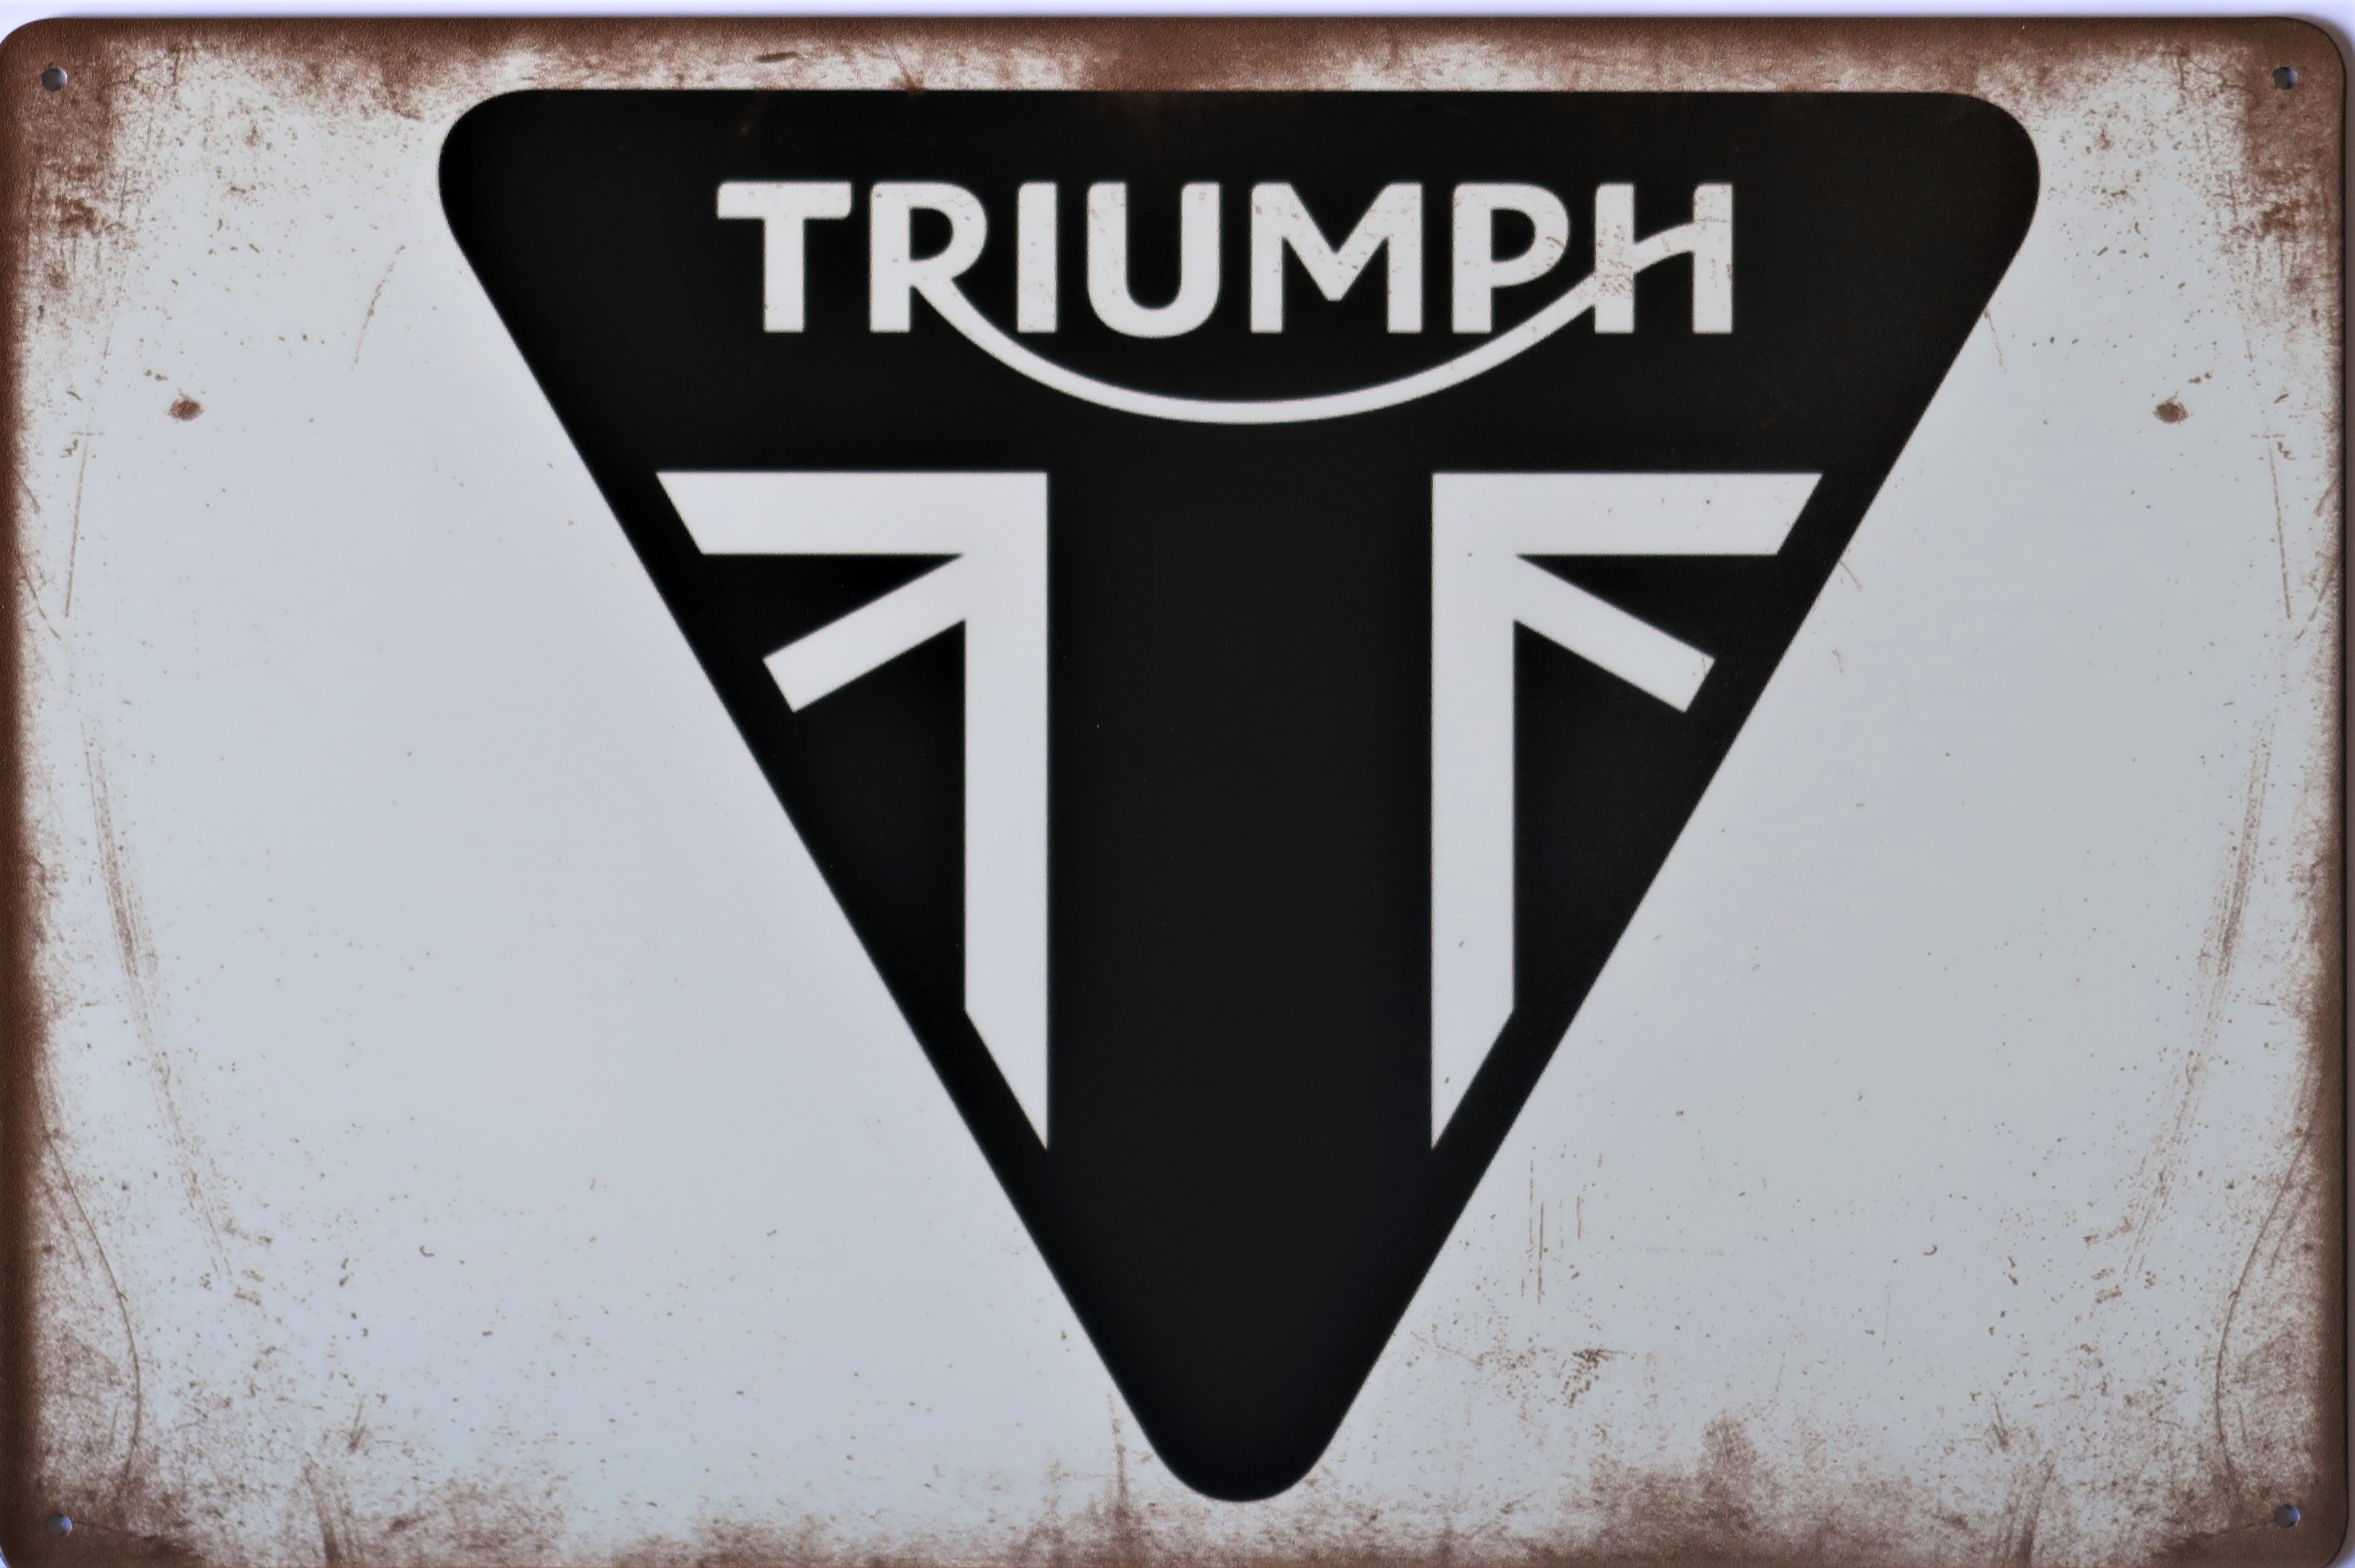 Triumph Motorcycle Aluminium Garage Art Metal Sign 30cm x 20cm - 12 Inches x 8 Inches